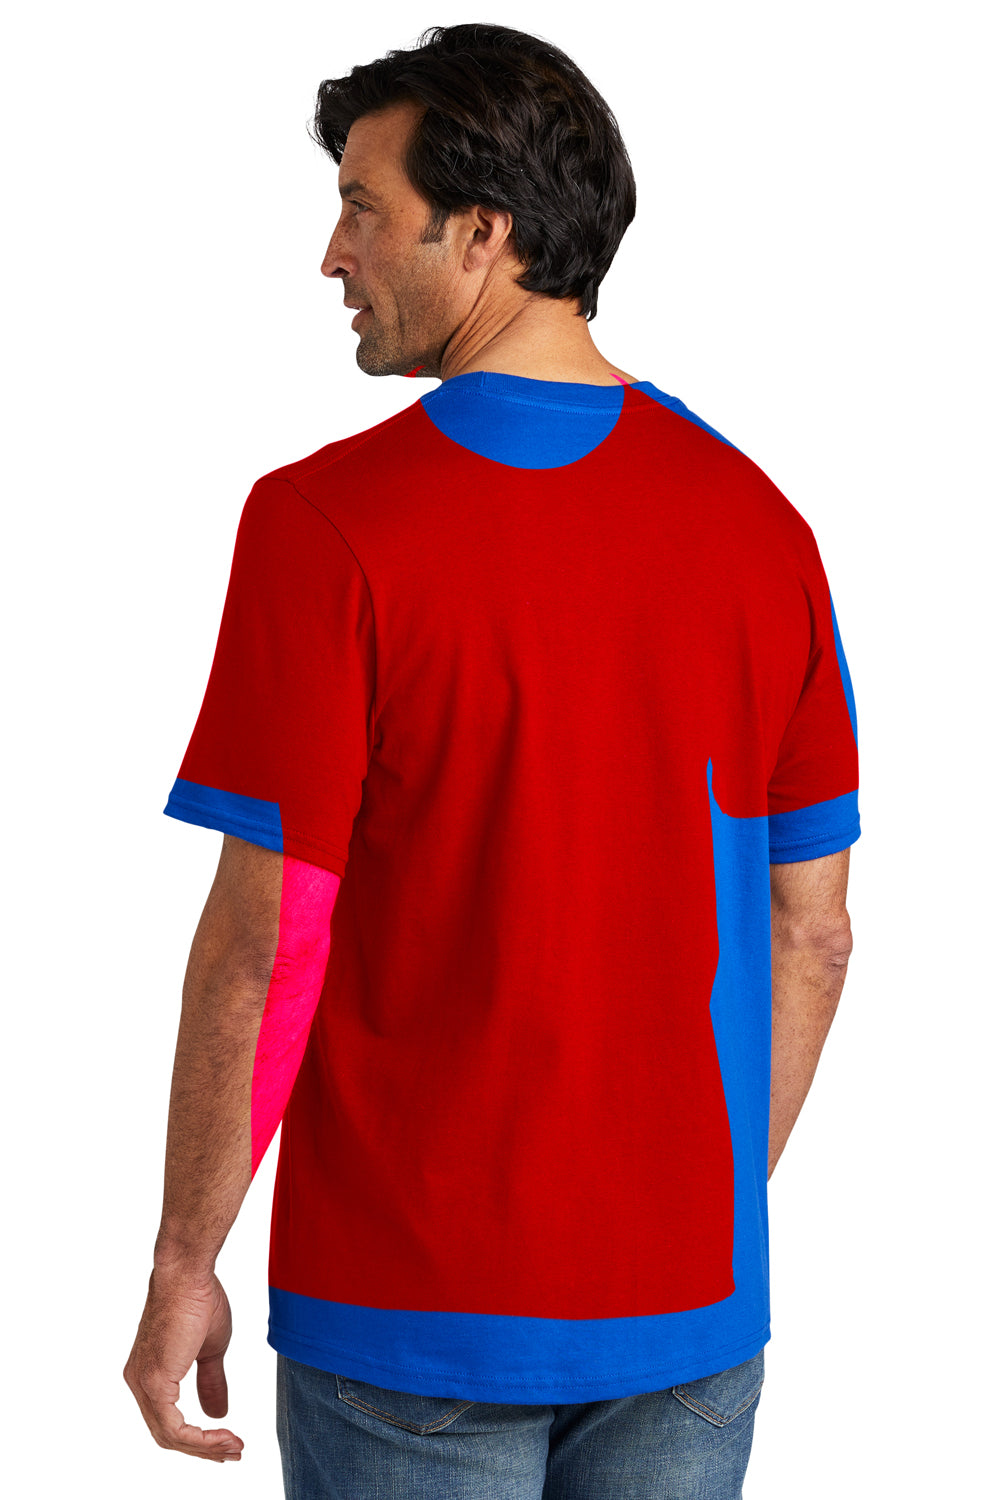 Volunteer Knitwear VL60 Chore Short Sleeve Crewneck T-Shirt Flag Red Back